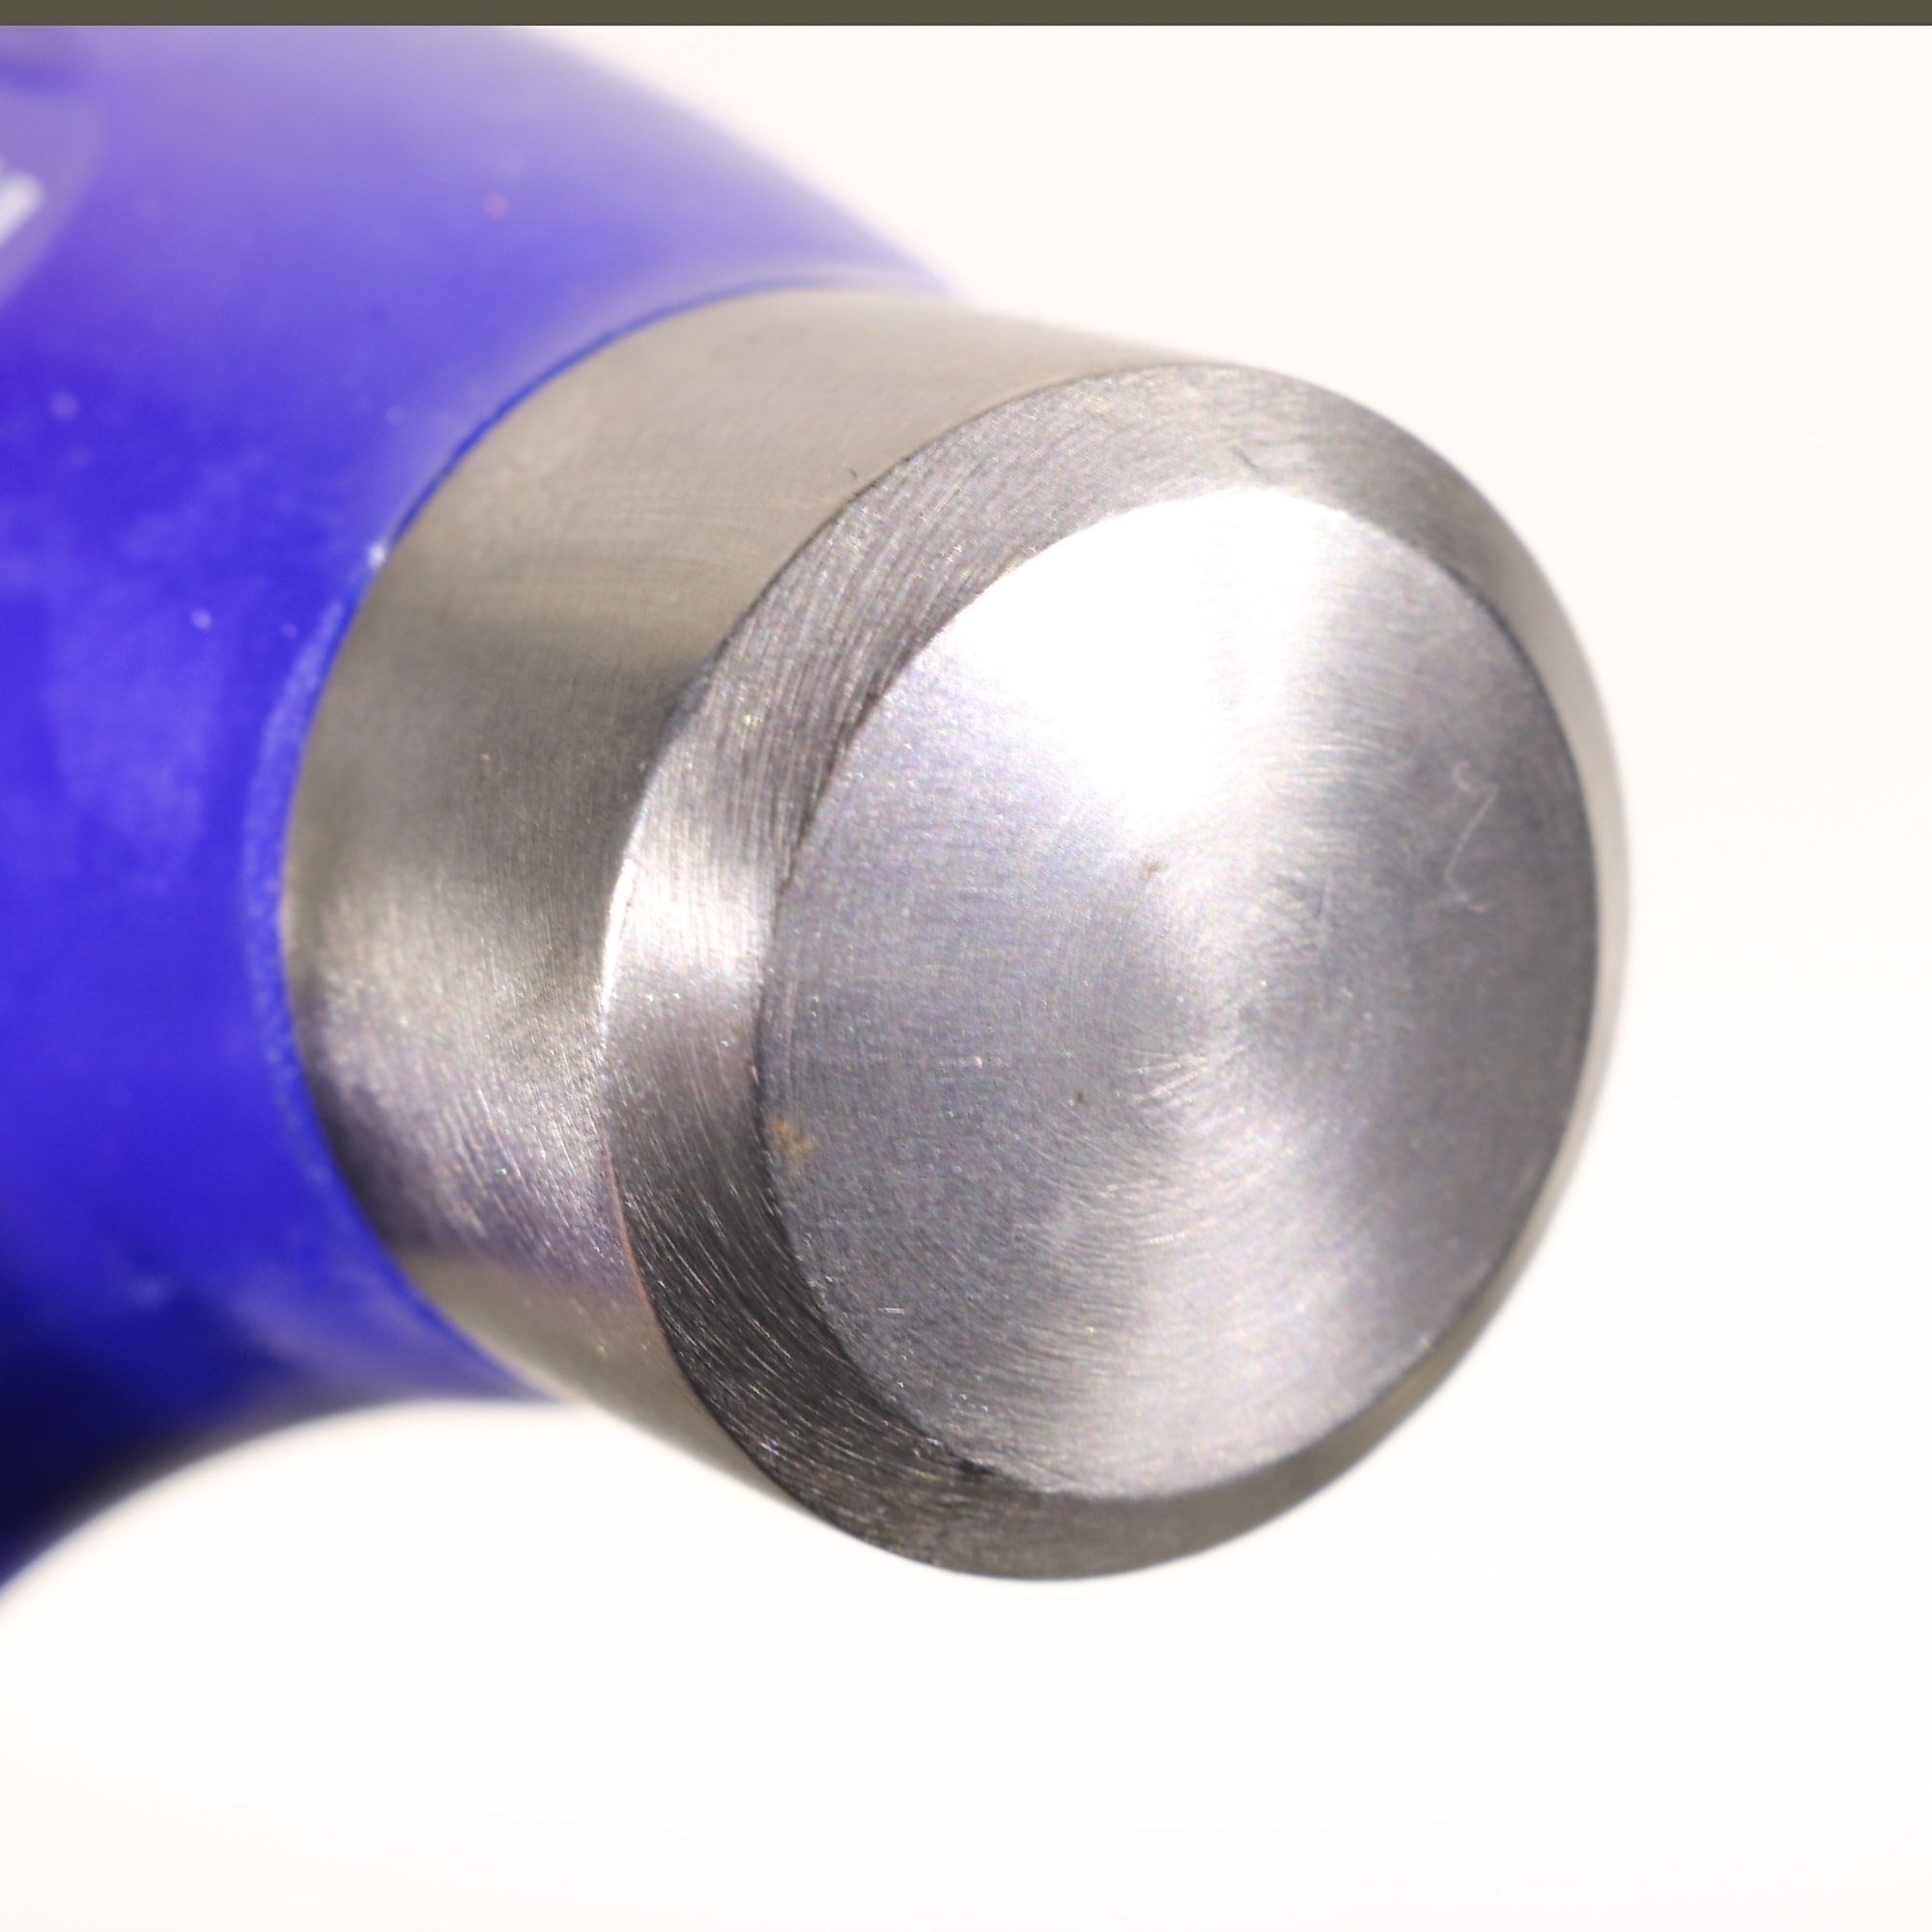 Baileigh, Flat Hardface Hammer, Handle Length 12.75 in, Model 1018021